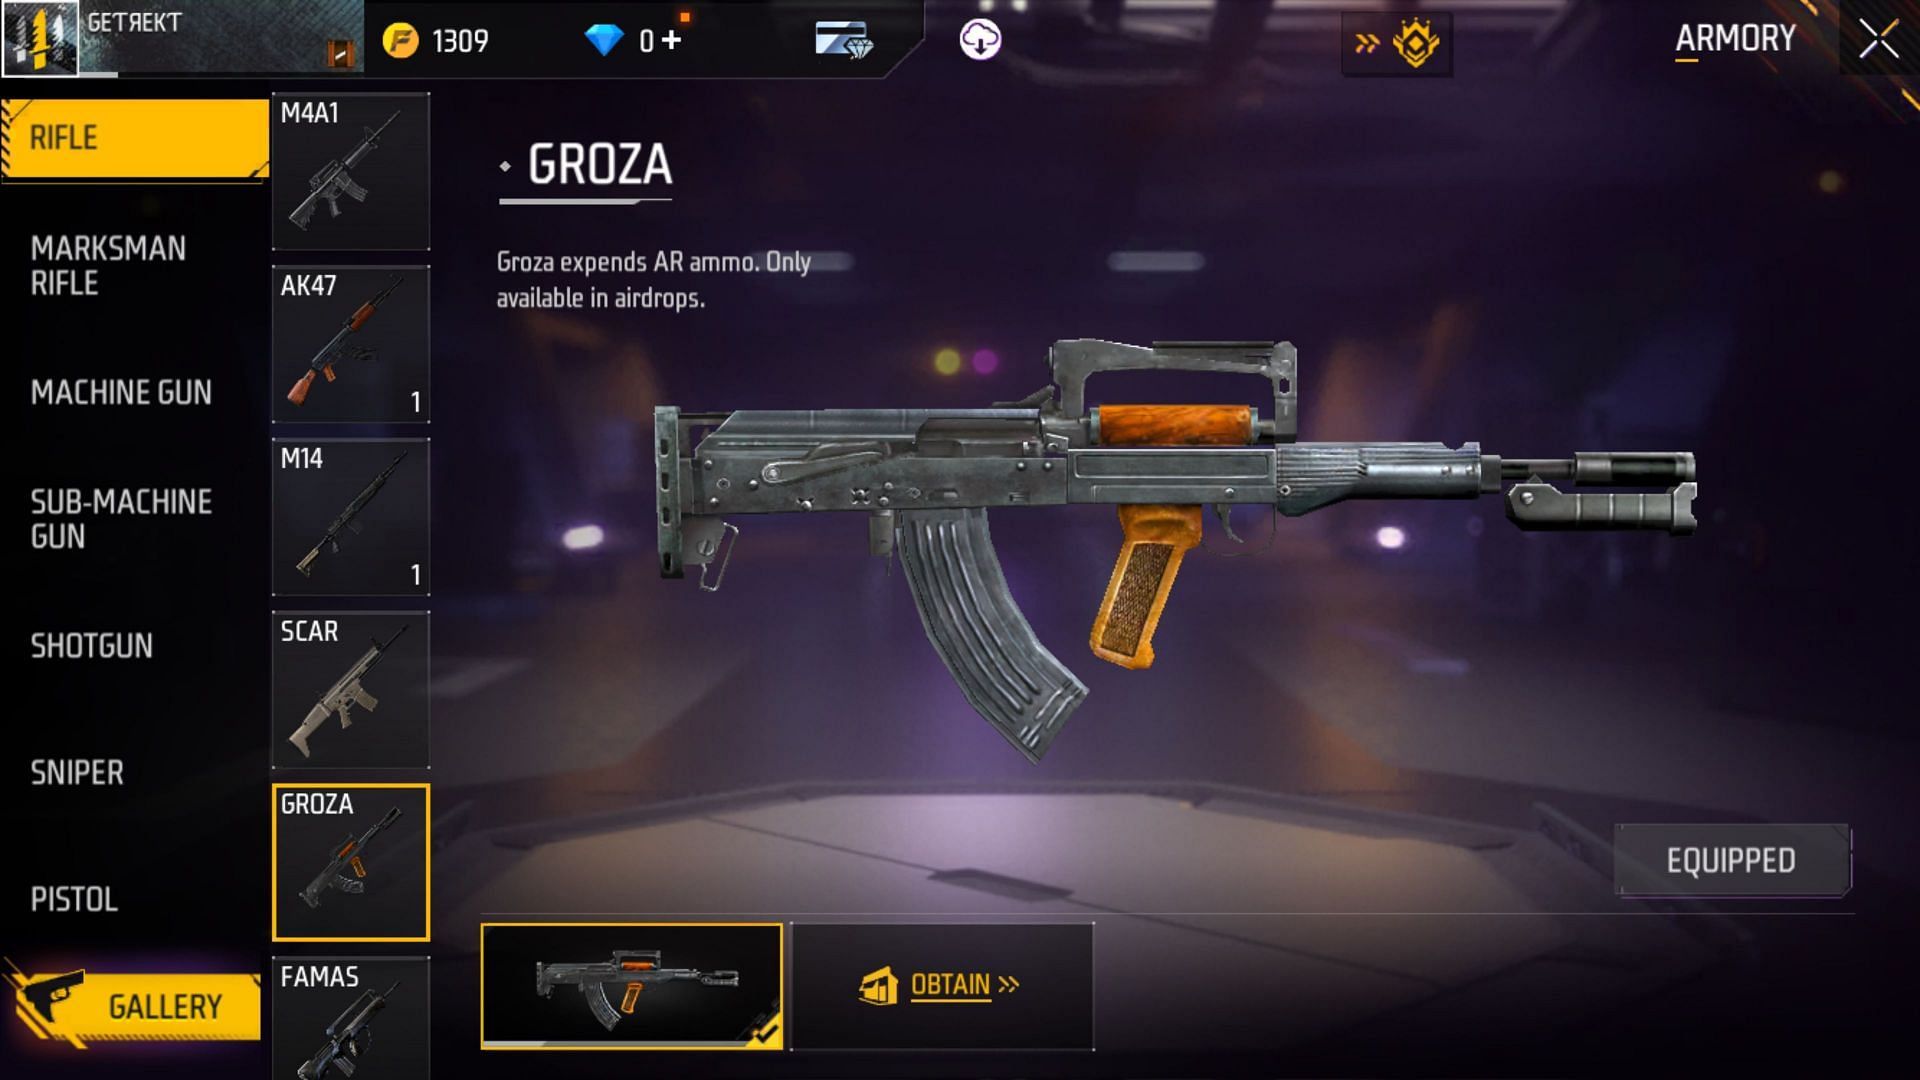 Groza - Rifle (Image via Garena)